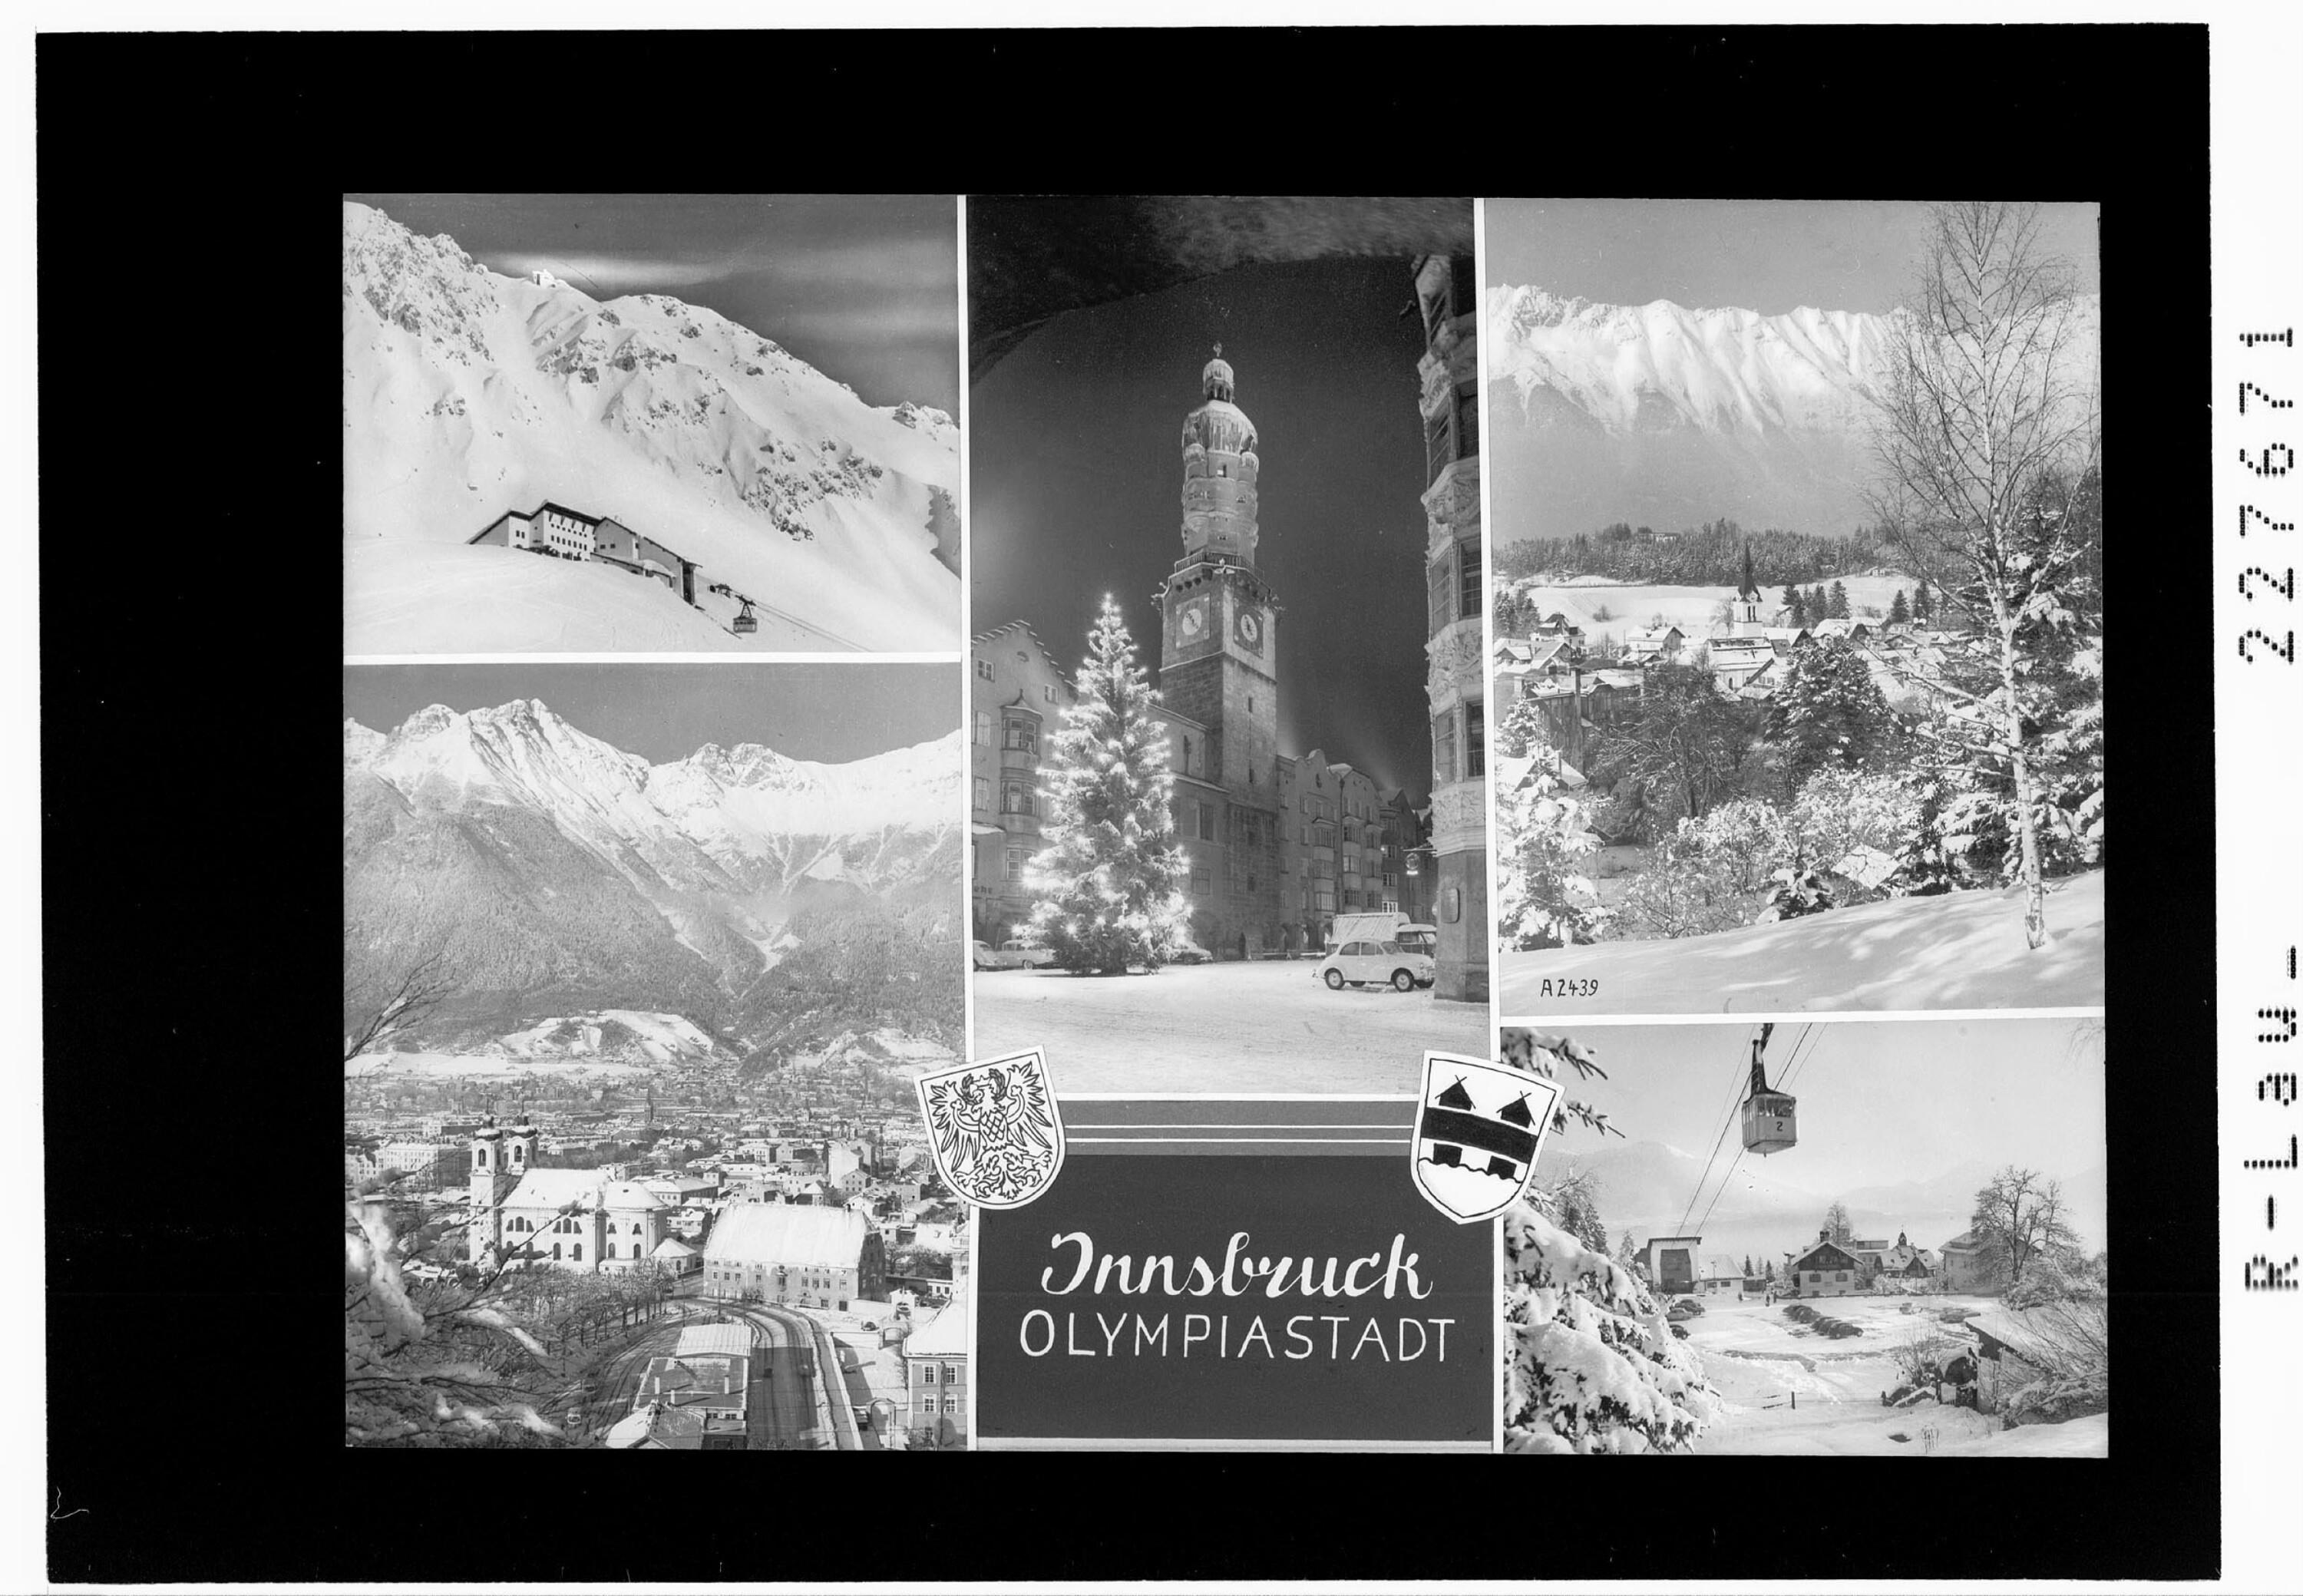 Innsbruck / Olympiastadt></div>


    <hr>
    <div class=